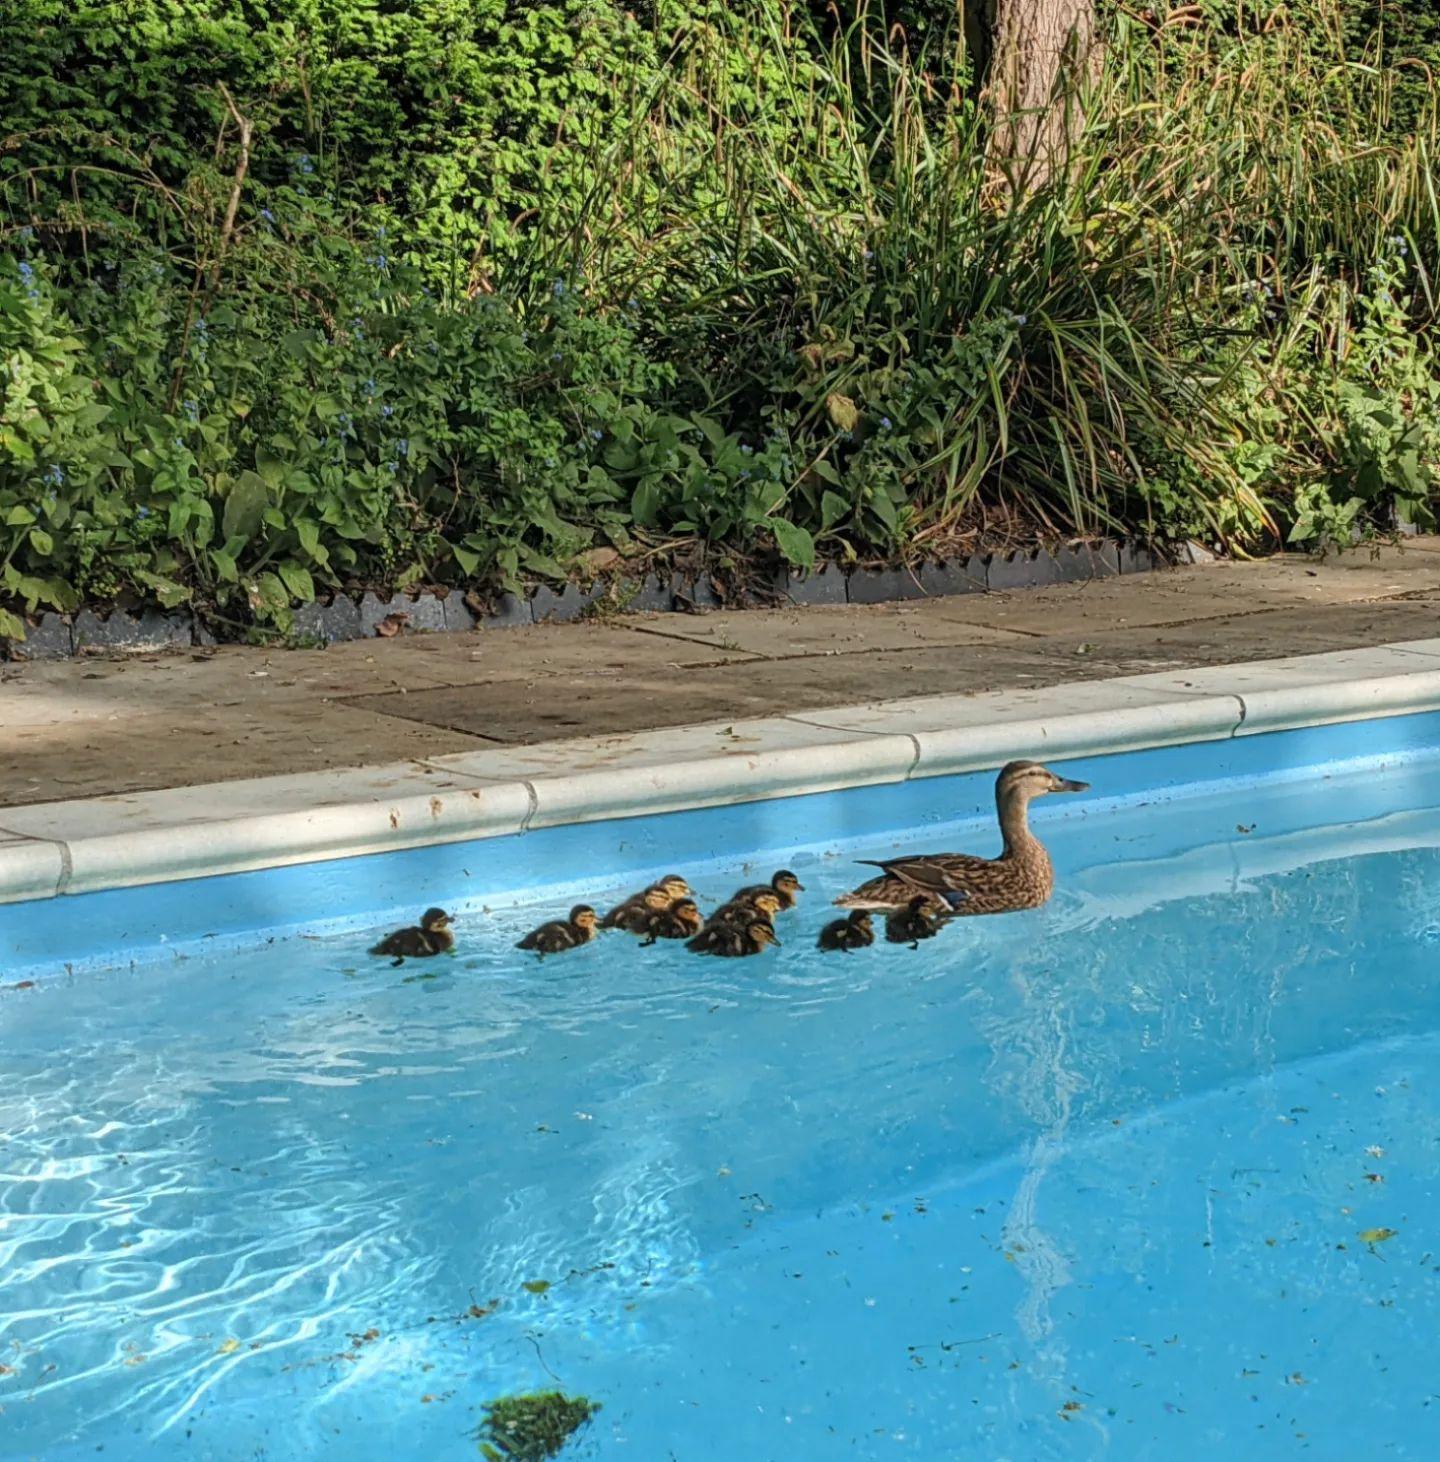 Ducks on the swimming pool